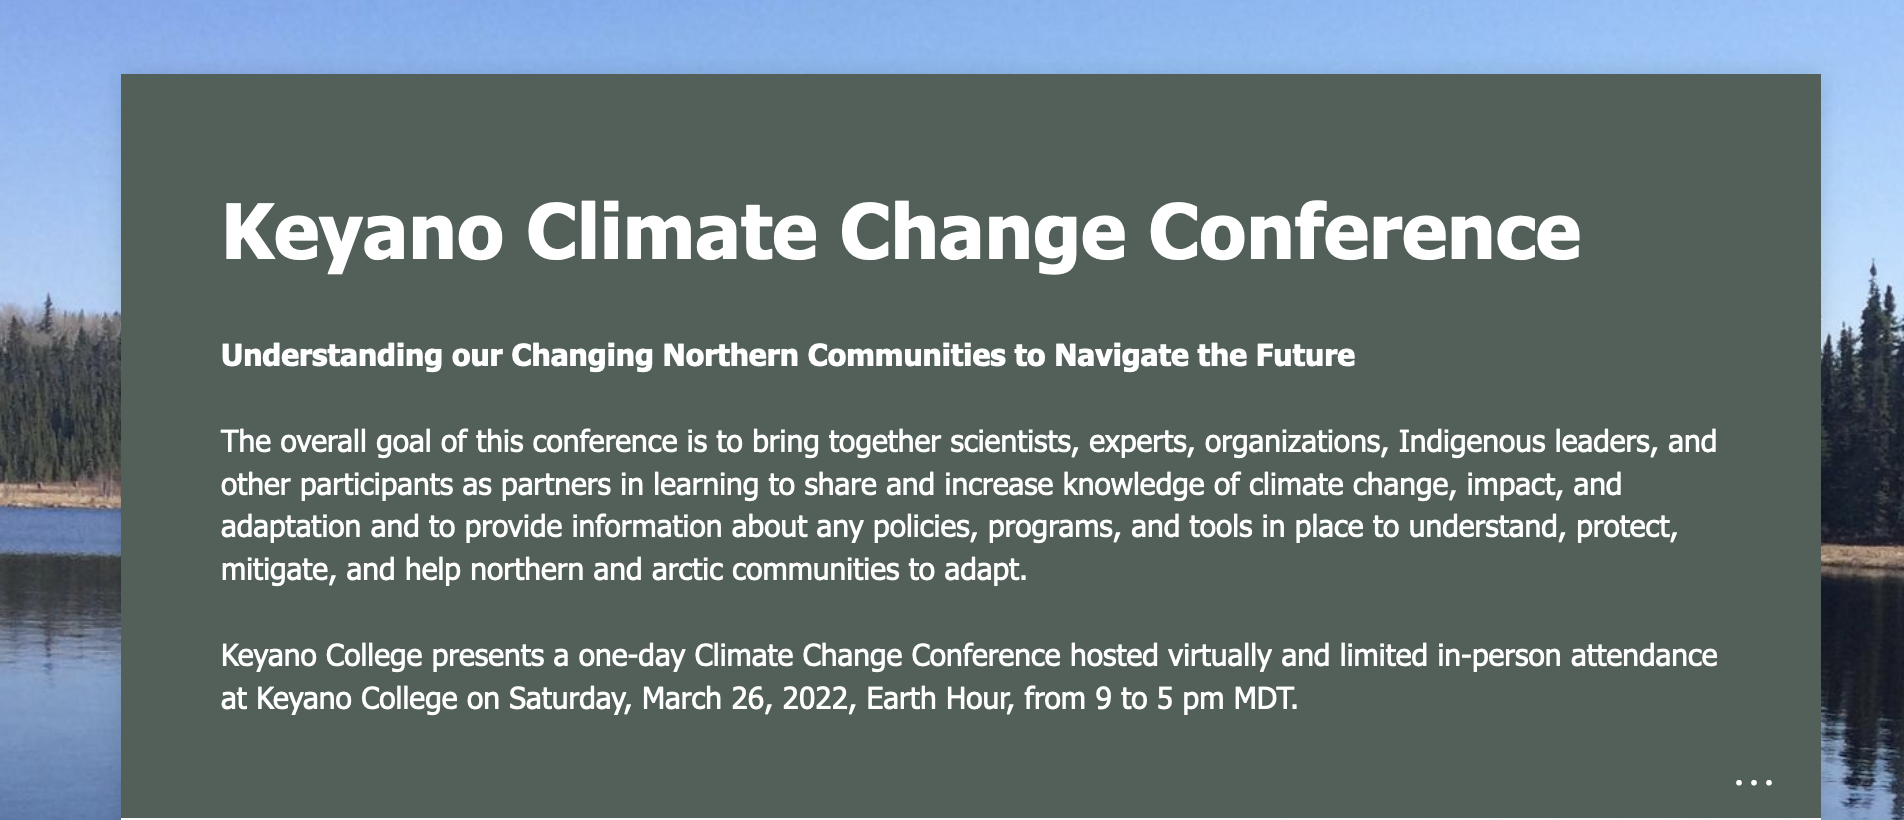 Keyano Climate Change Conference